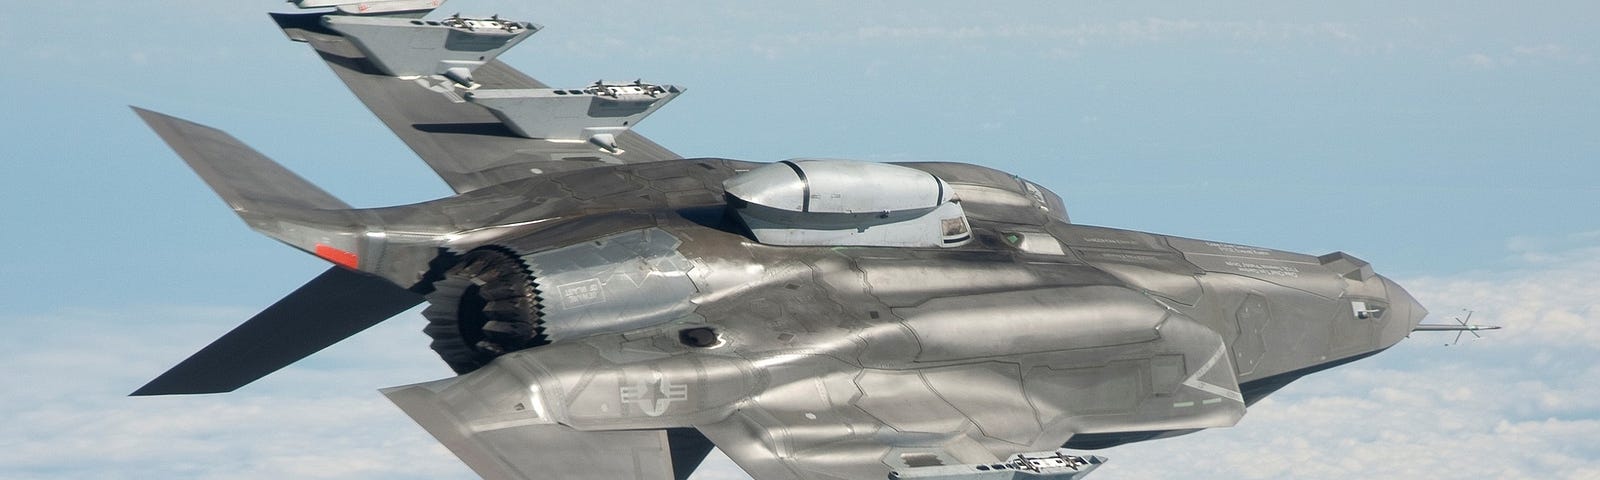 An upside down F35 jet fighter